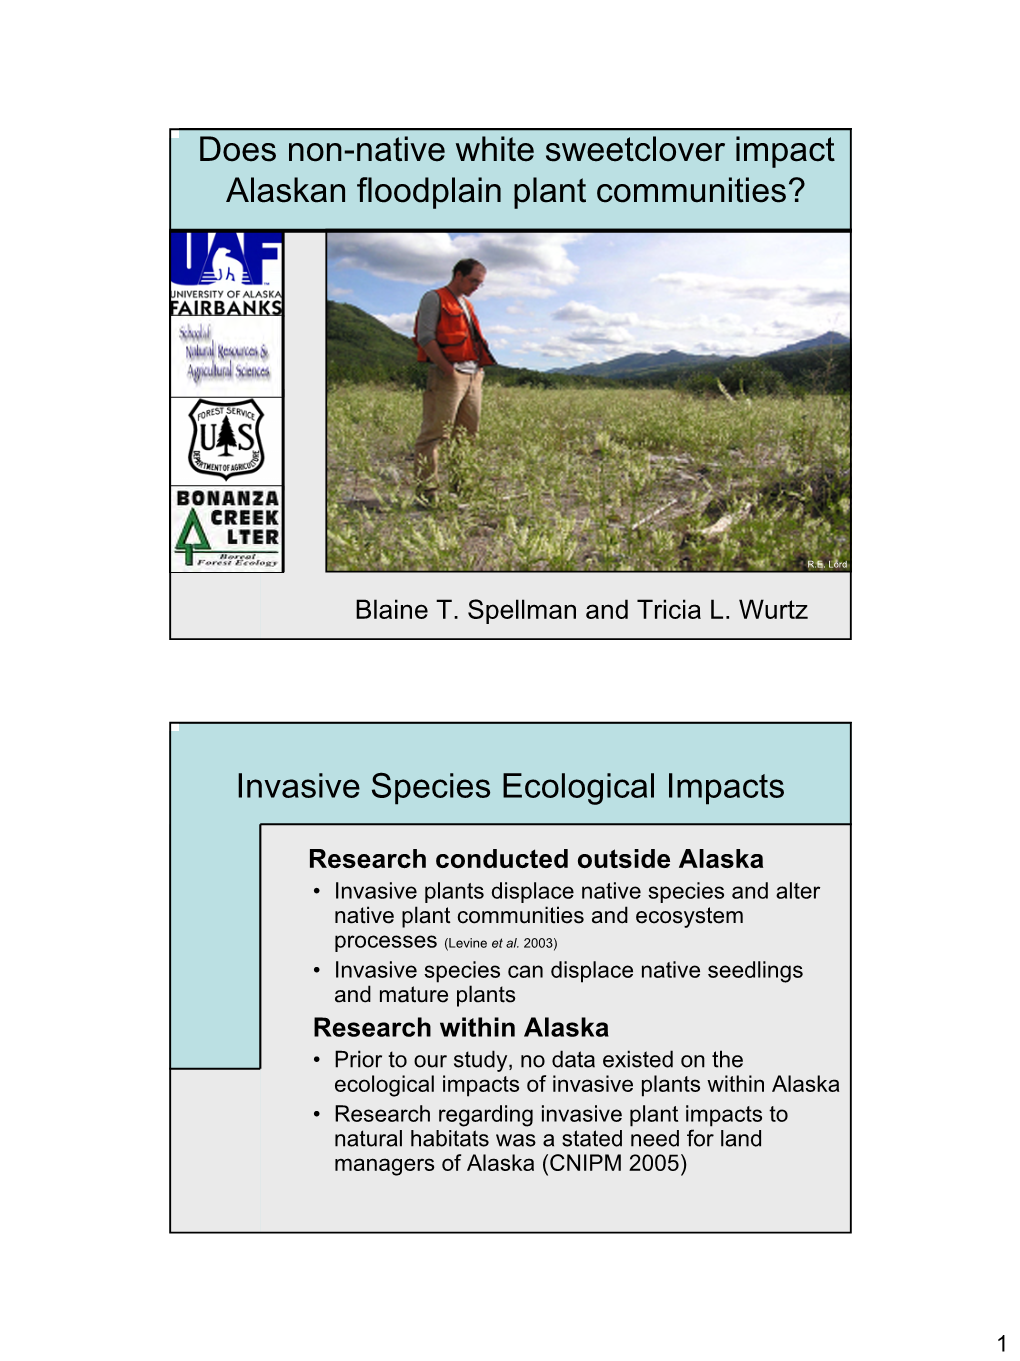 Invasive Species Ecological Impacts